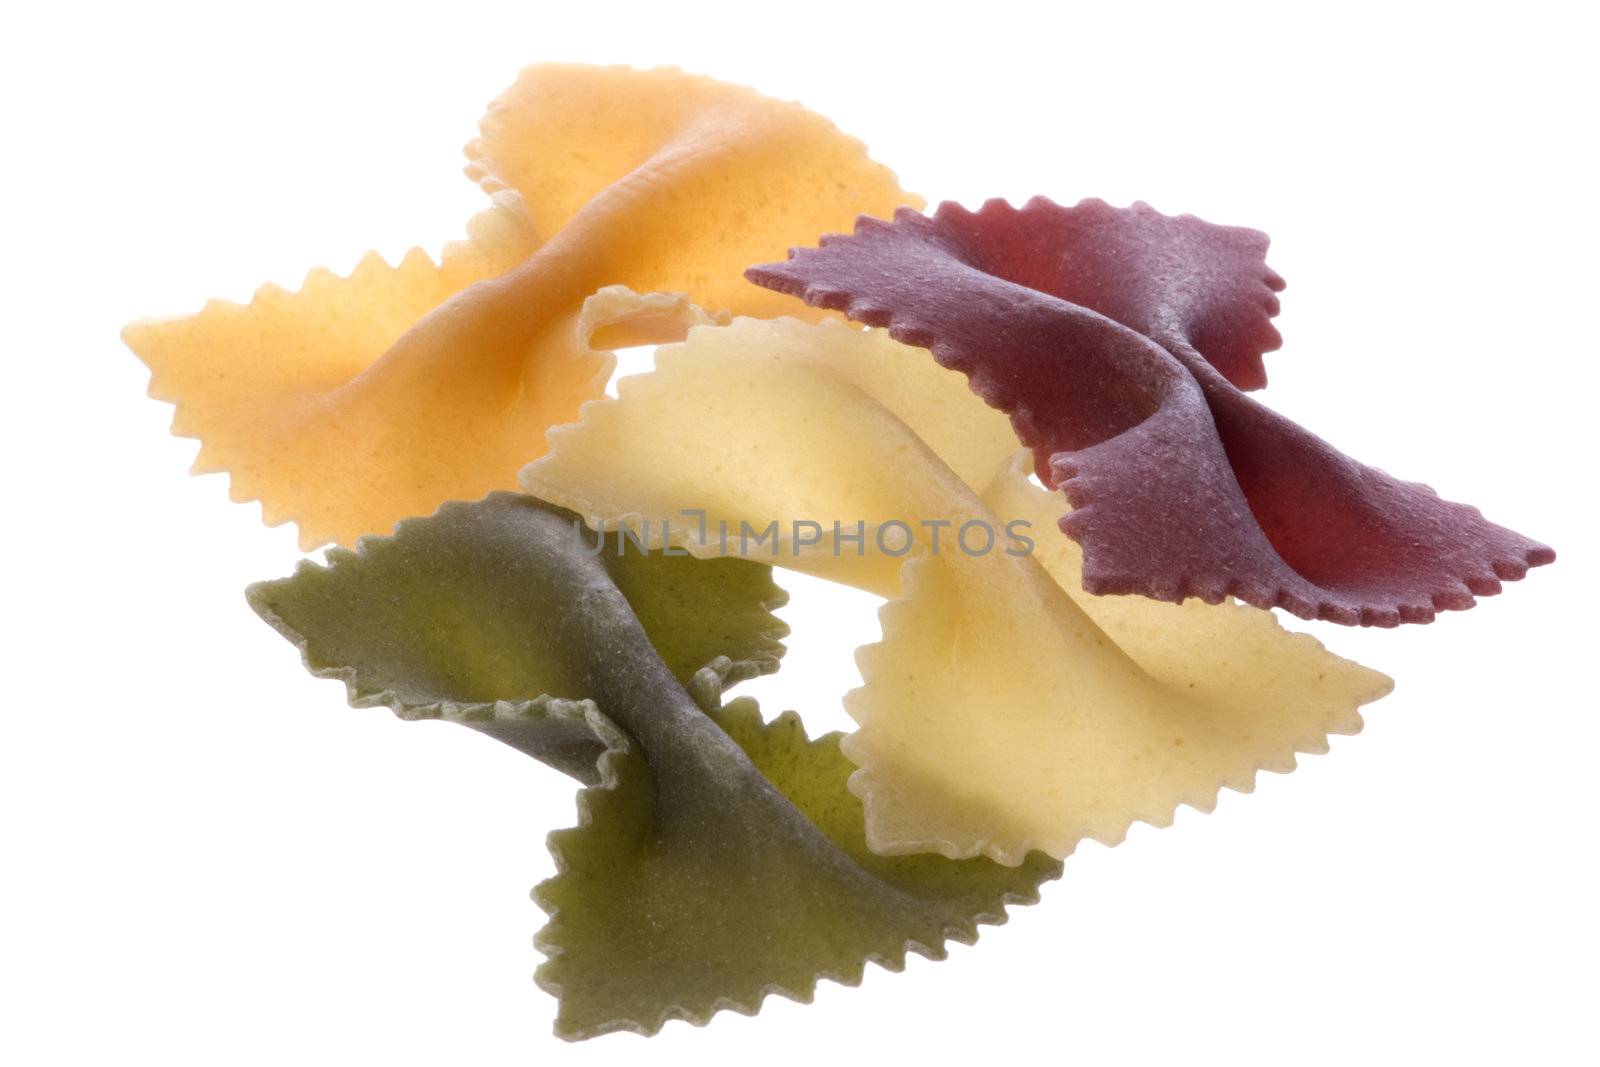 Isolated macro image of bowtie shaped organic pasta.